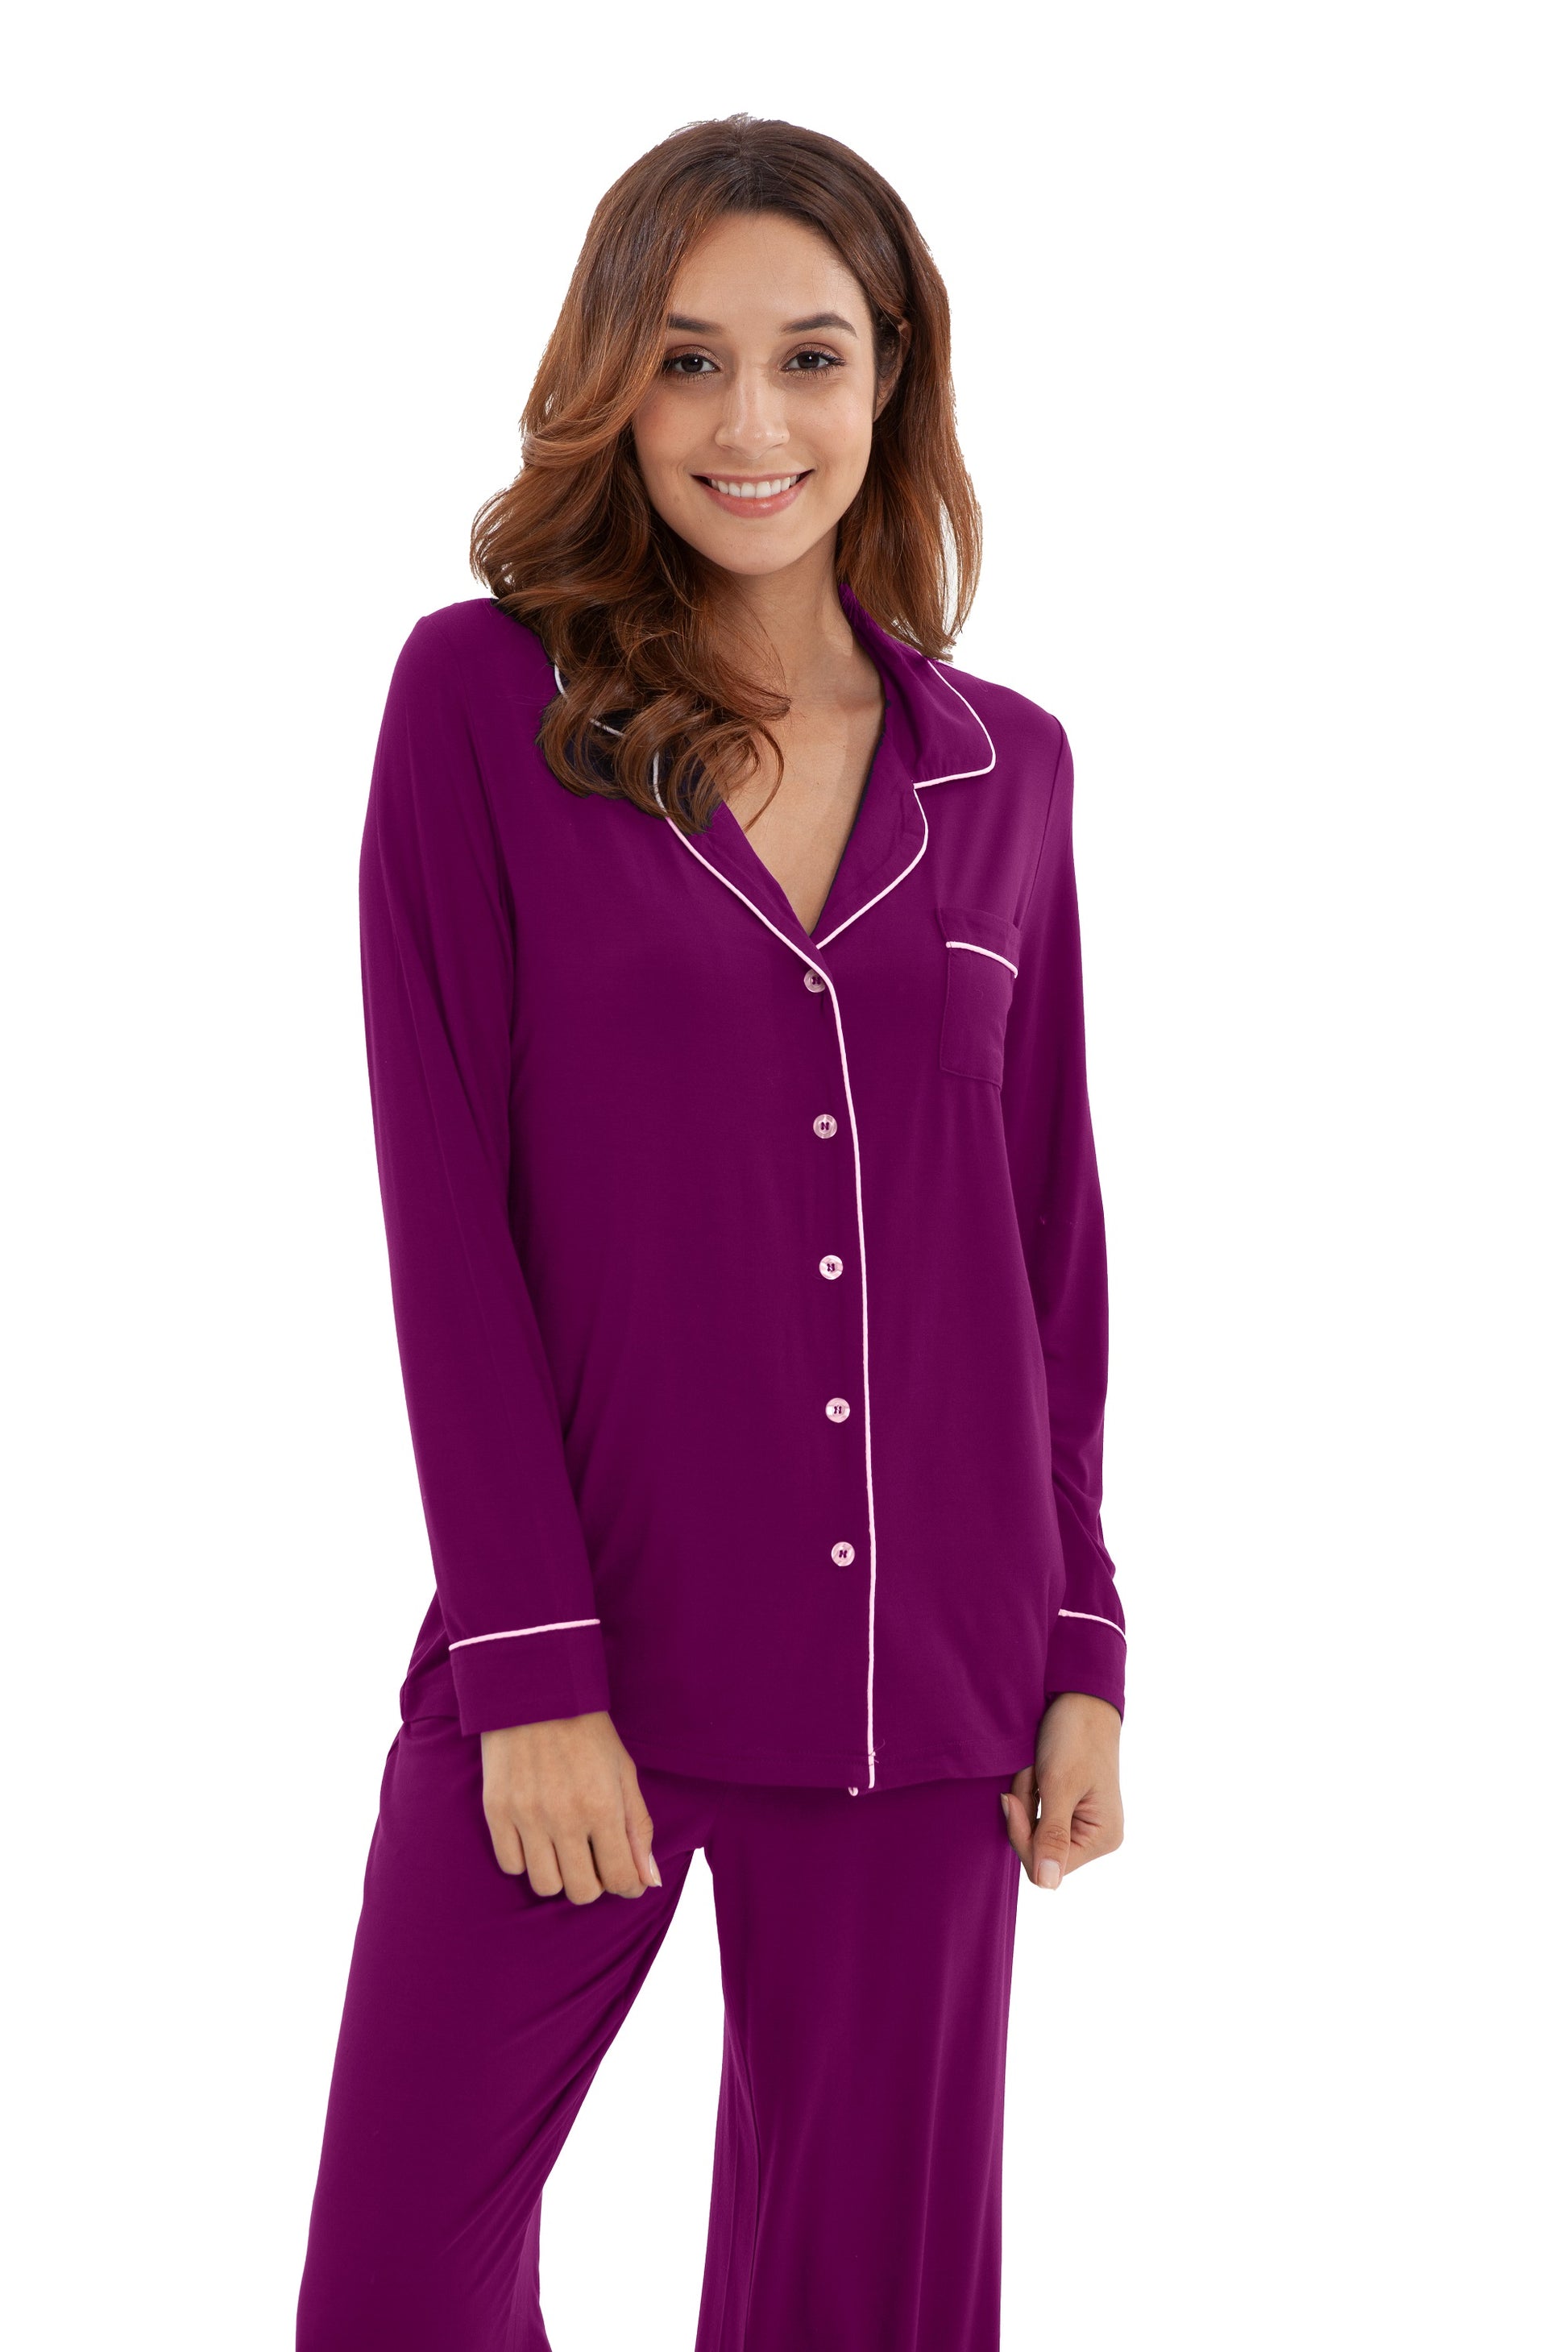 Avamo Women Nightwear Suit 2 Pieces Pajamas Set Lounge Pjs Sexy Sleepwear  Outfits Loungwear Home Clothes Bright Purple S 